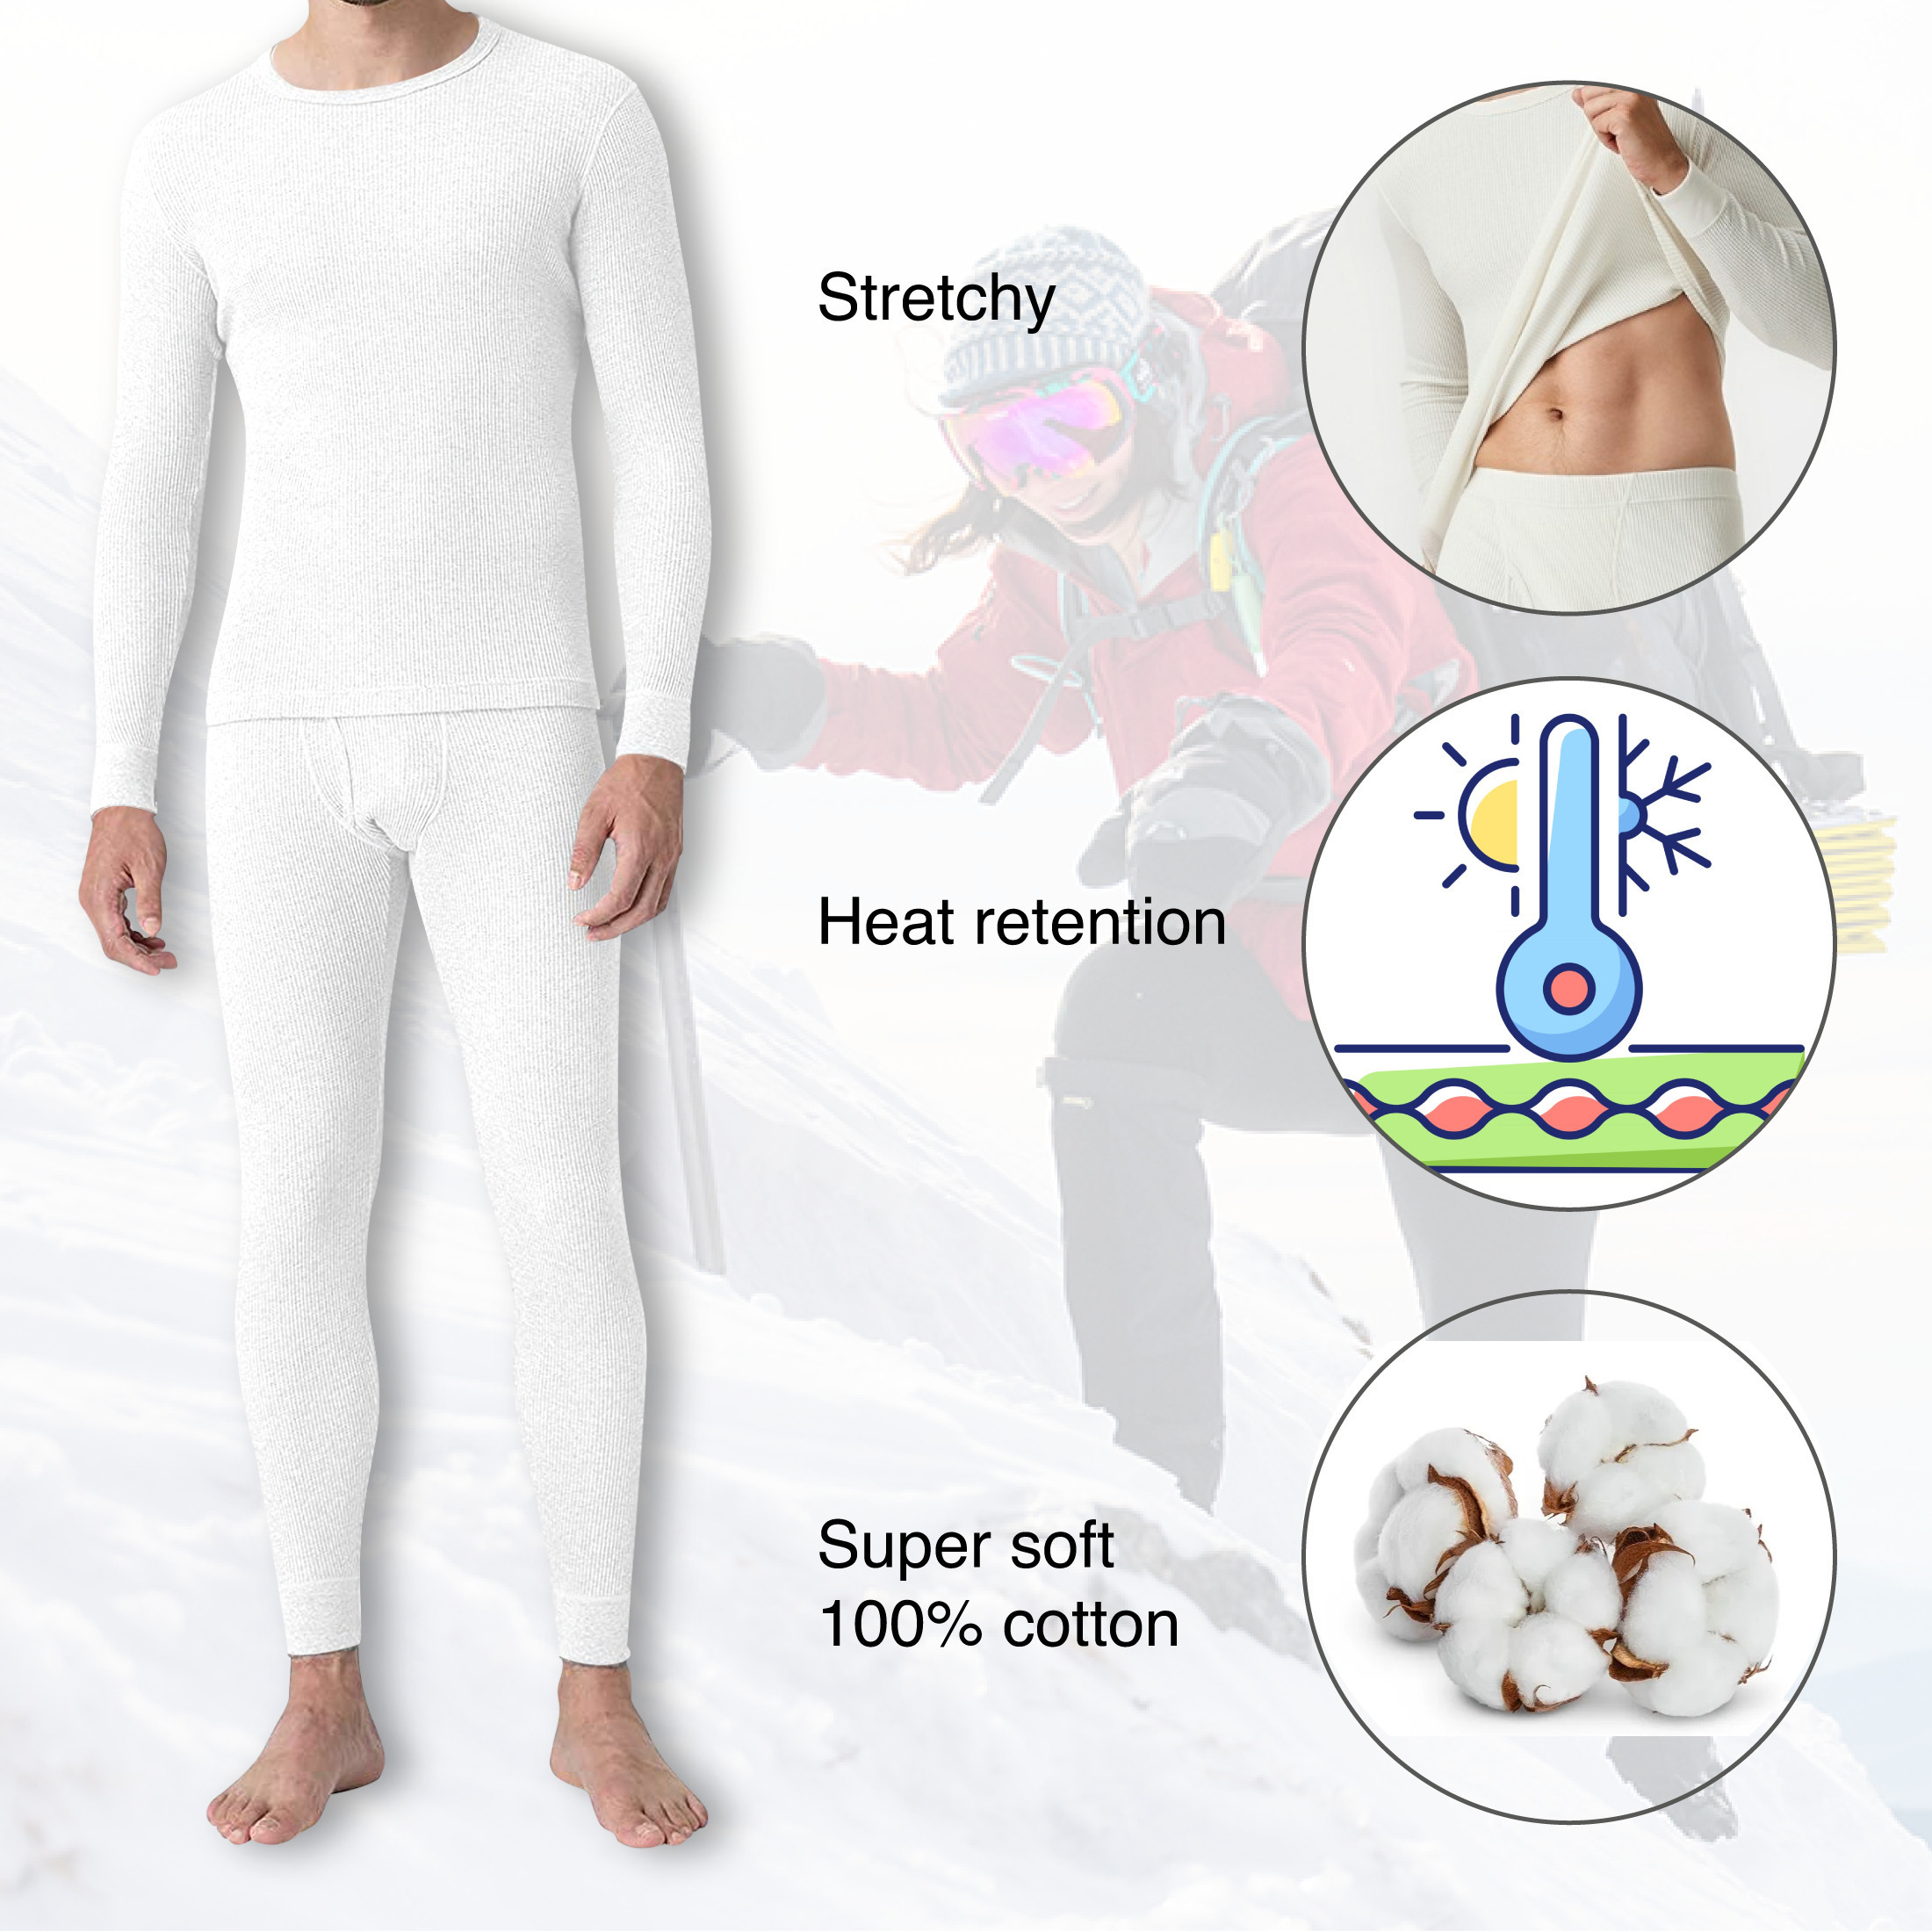 2-Sets: Men's Super Soft Cotton Waffle Knit Winter Thermal Underwear Set - Grey & Navy, Large